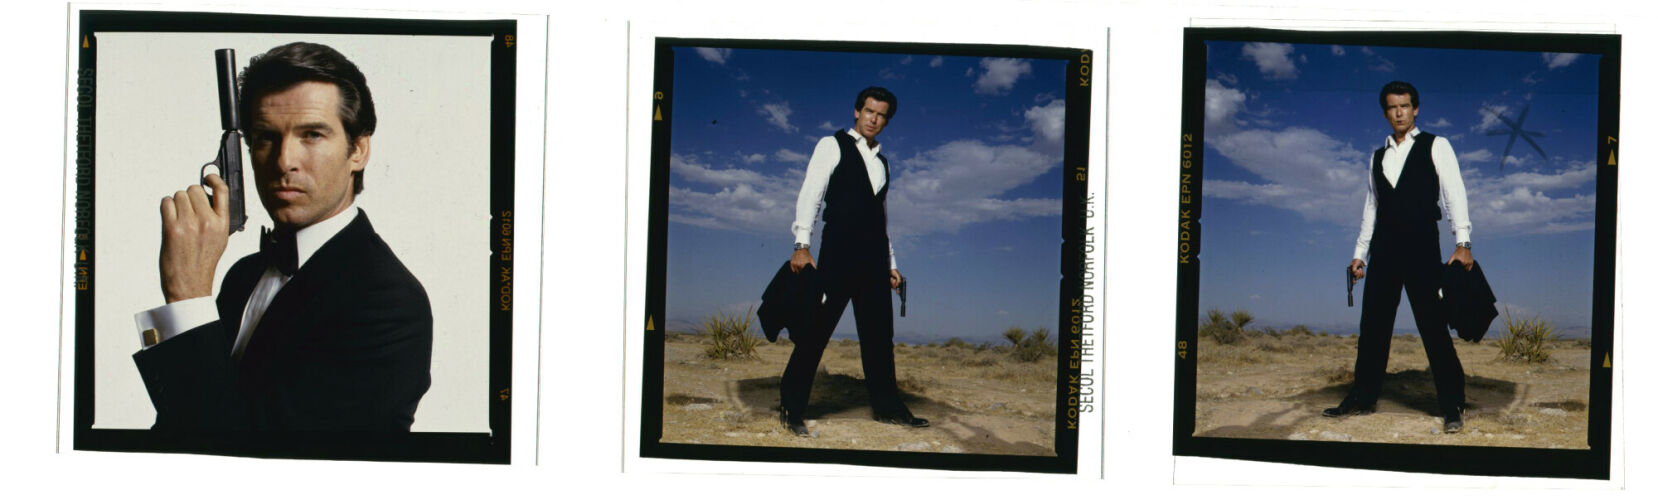 Bond_Contact_035: Pierce Brosnan as James Bond